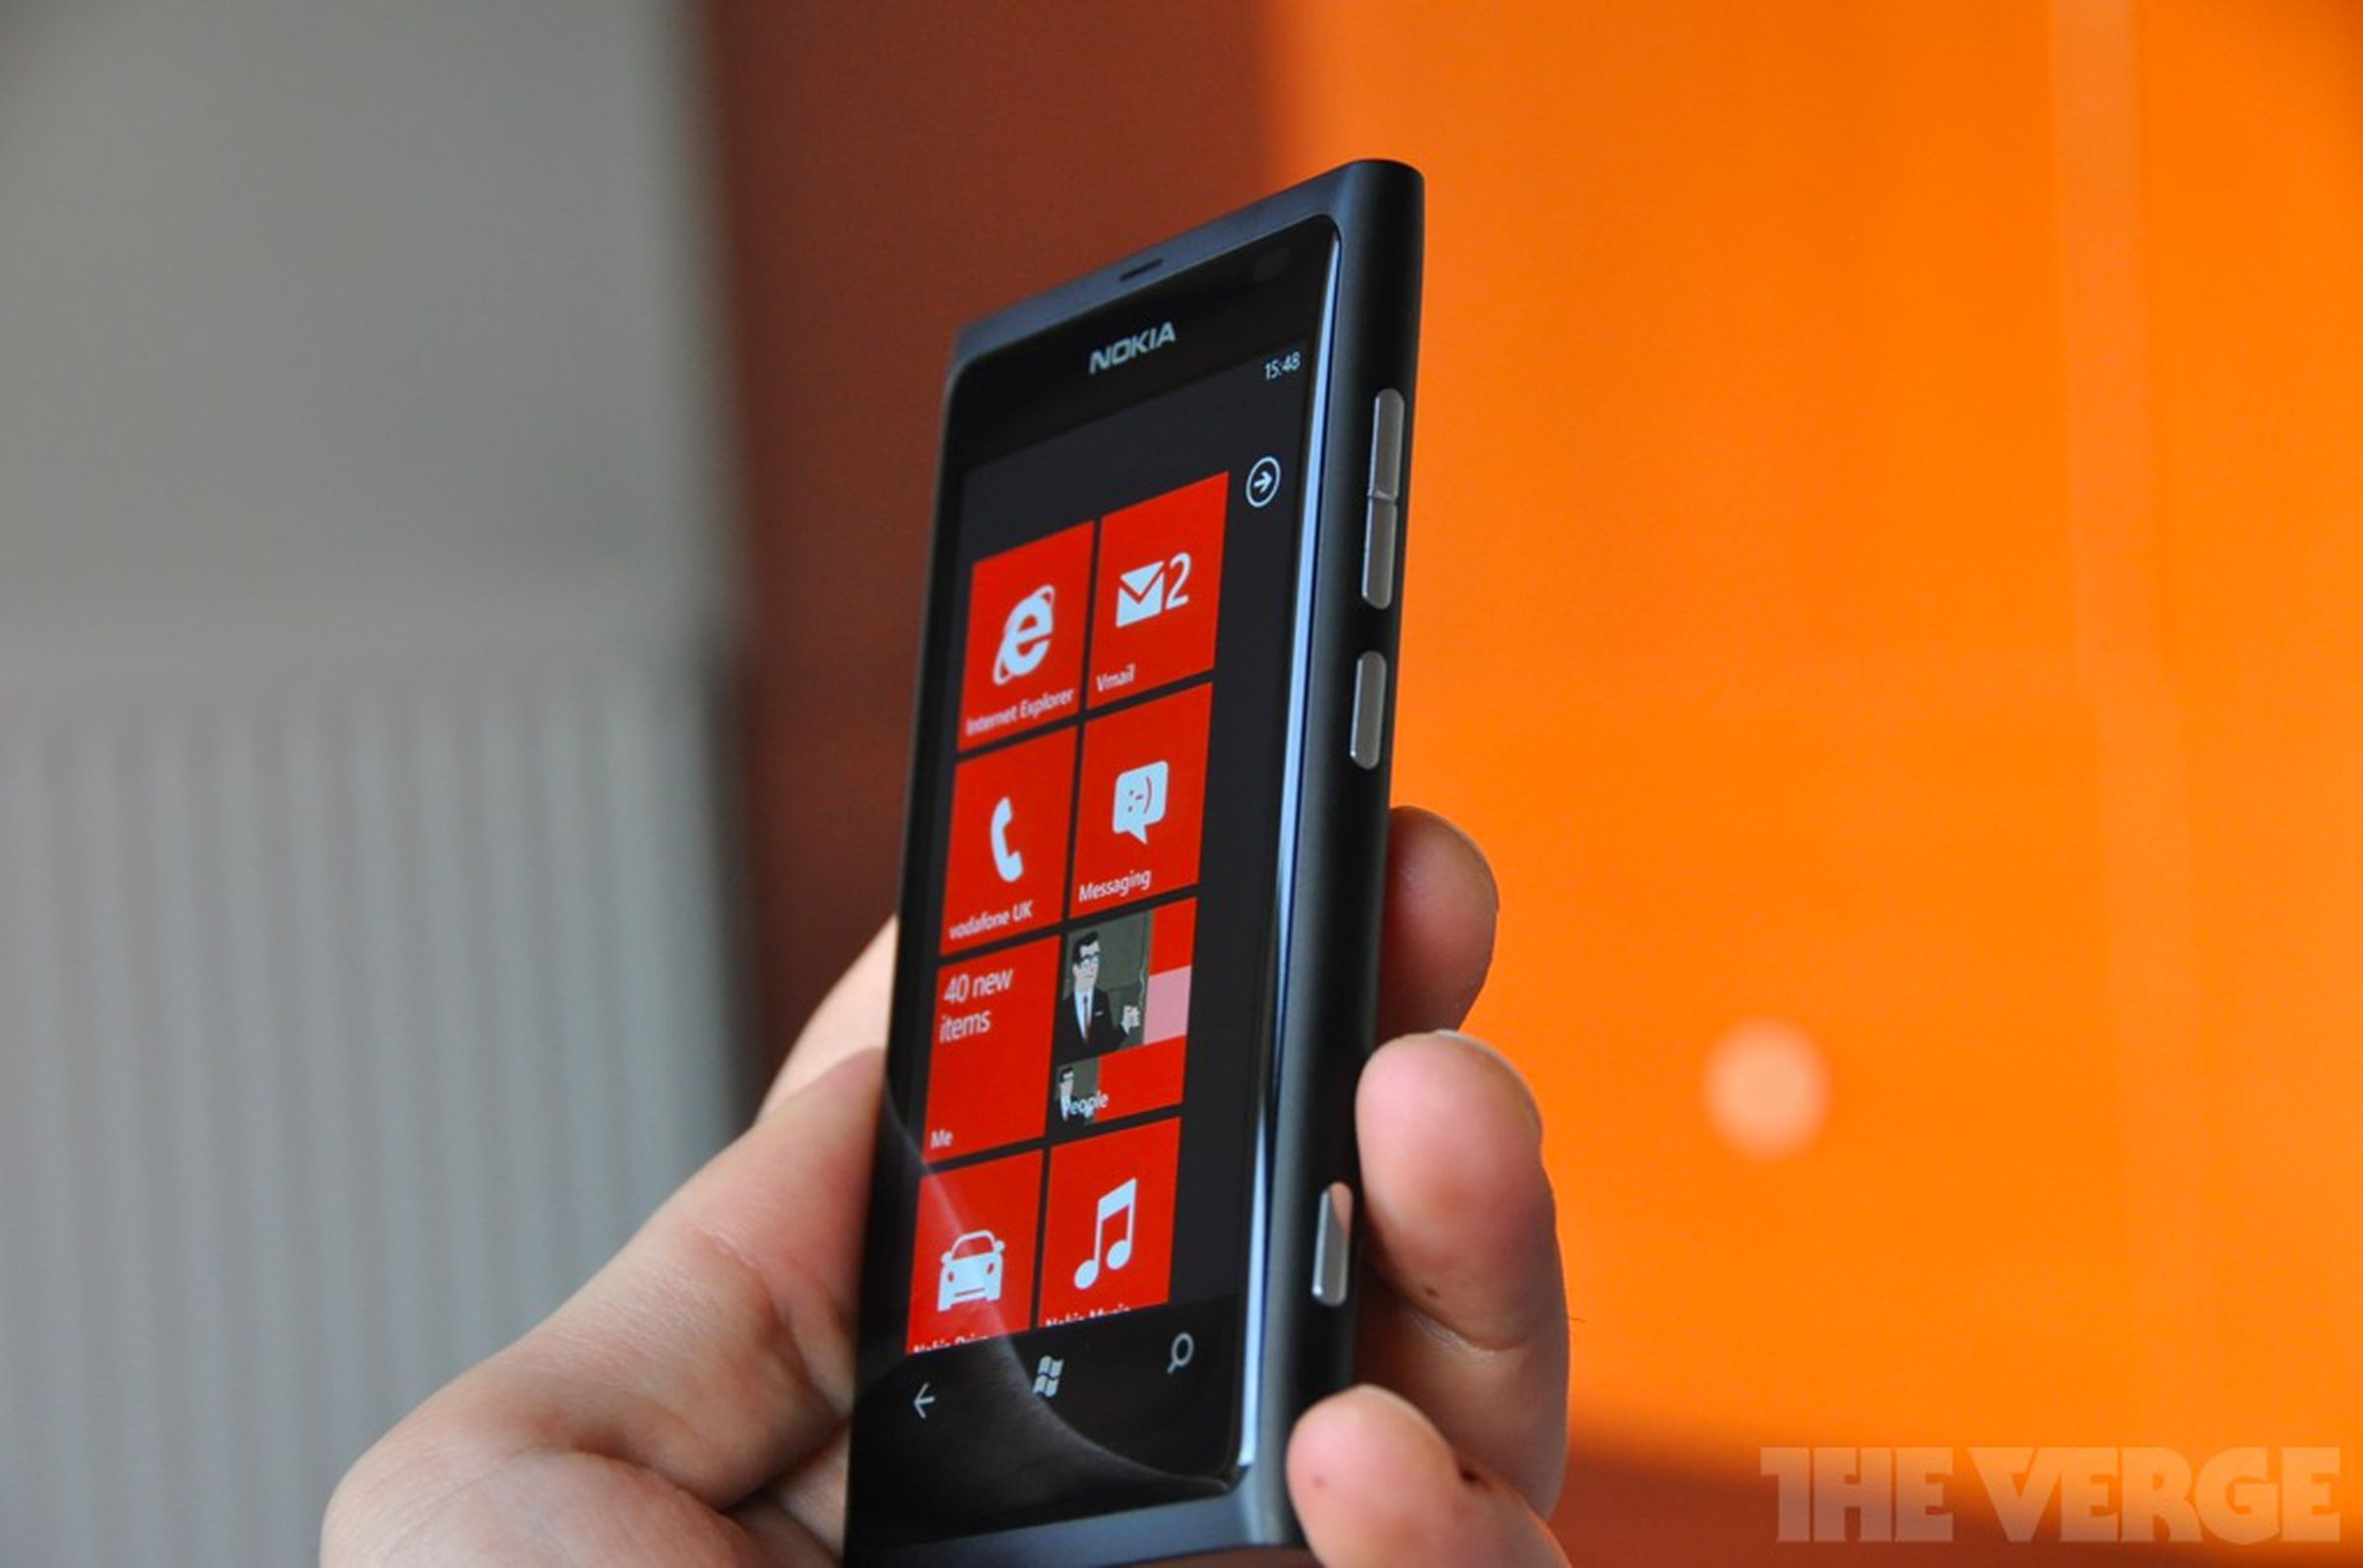 Lumia 800 display